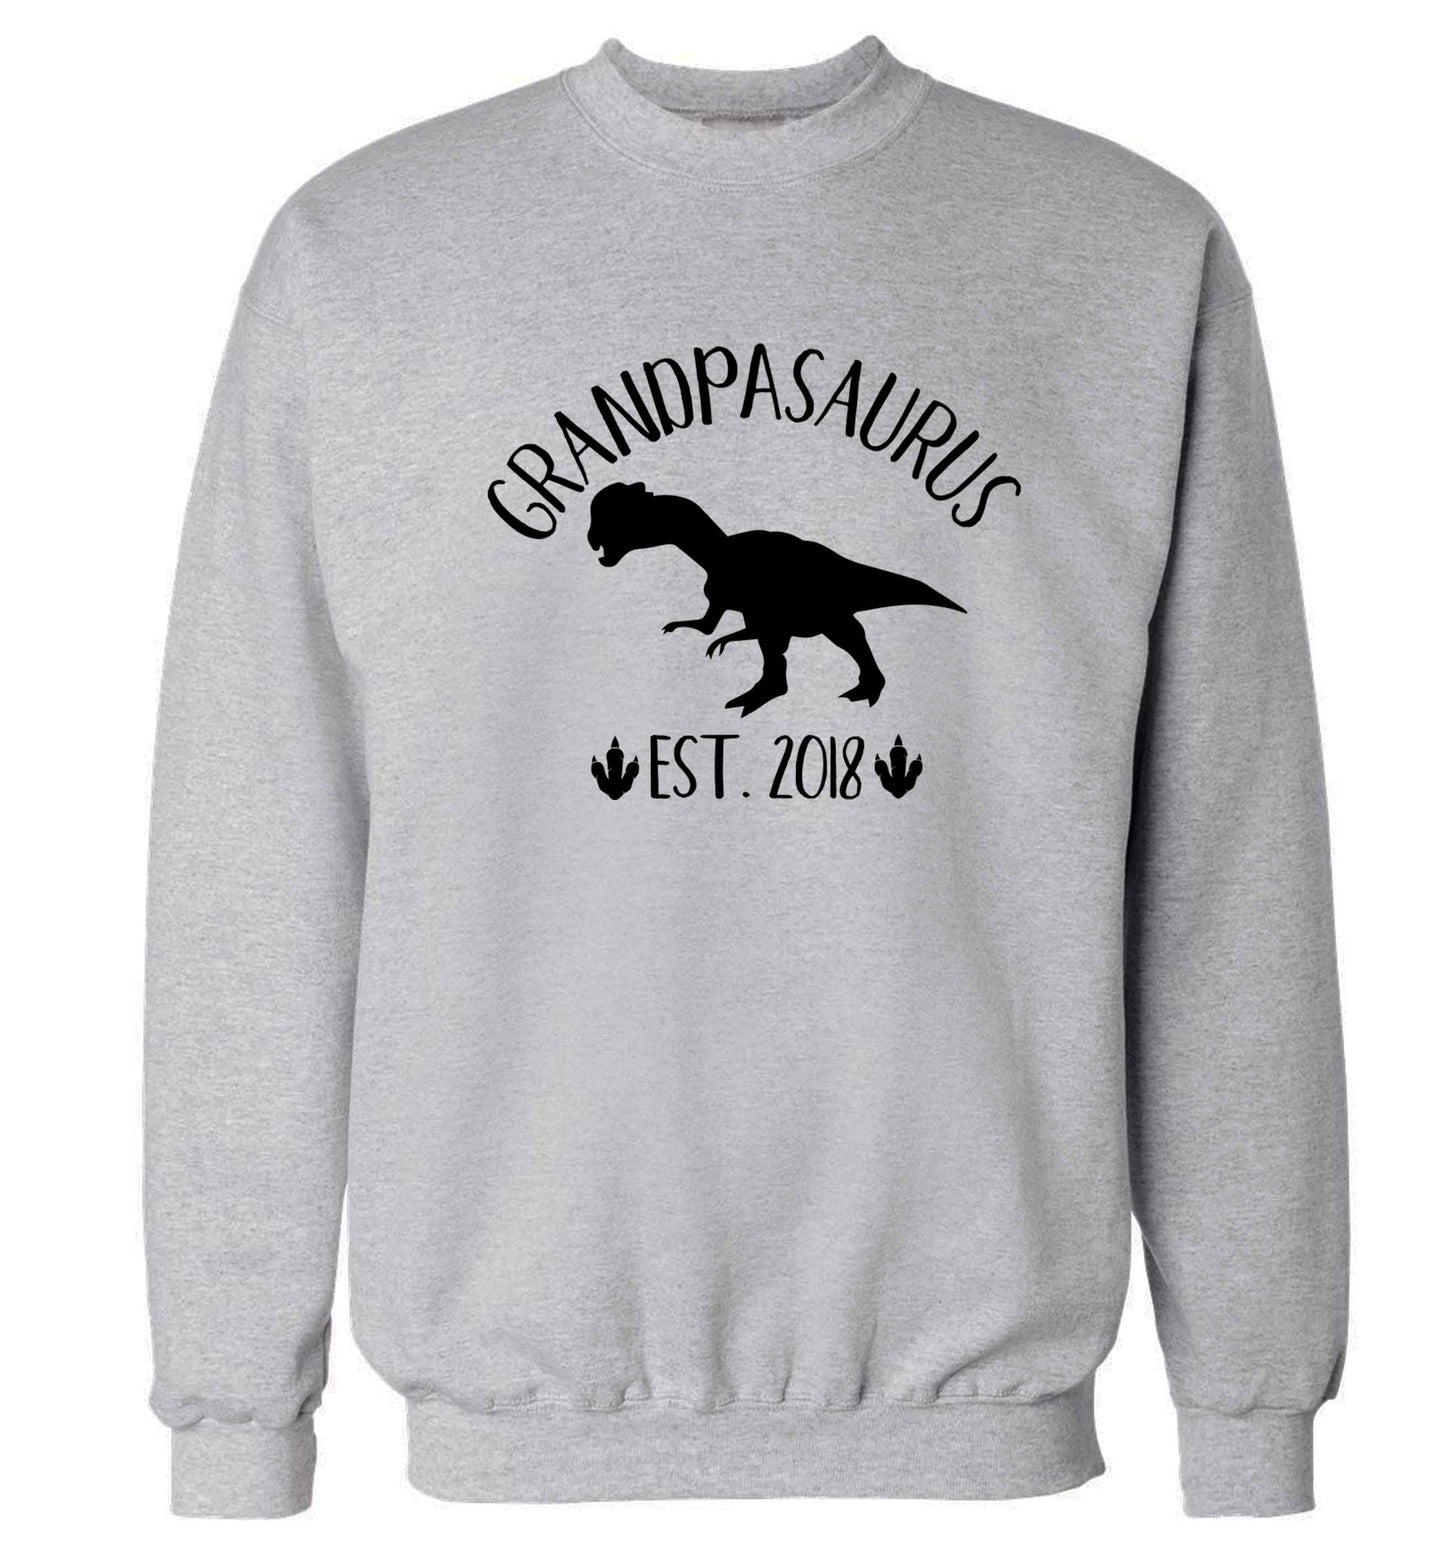 Personalised grandpasaurus since (custom date) Adult's unisex grey Sweater 2XL